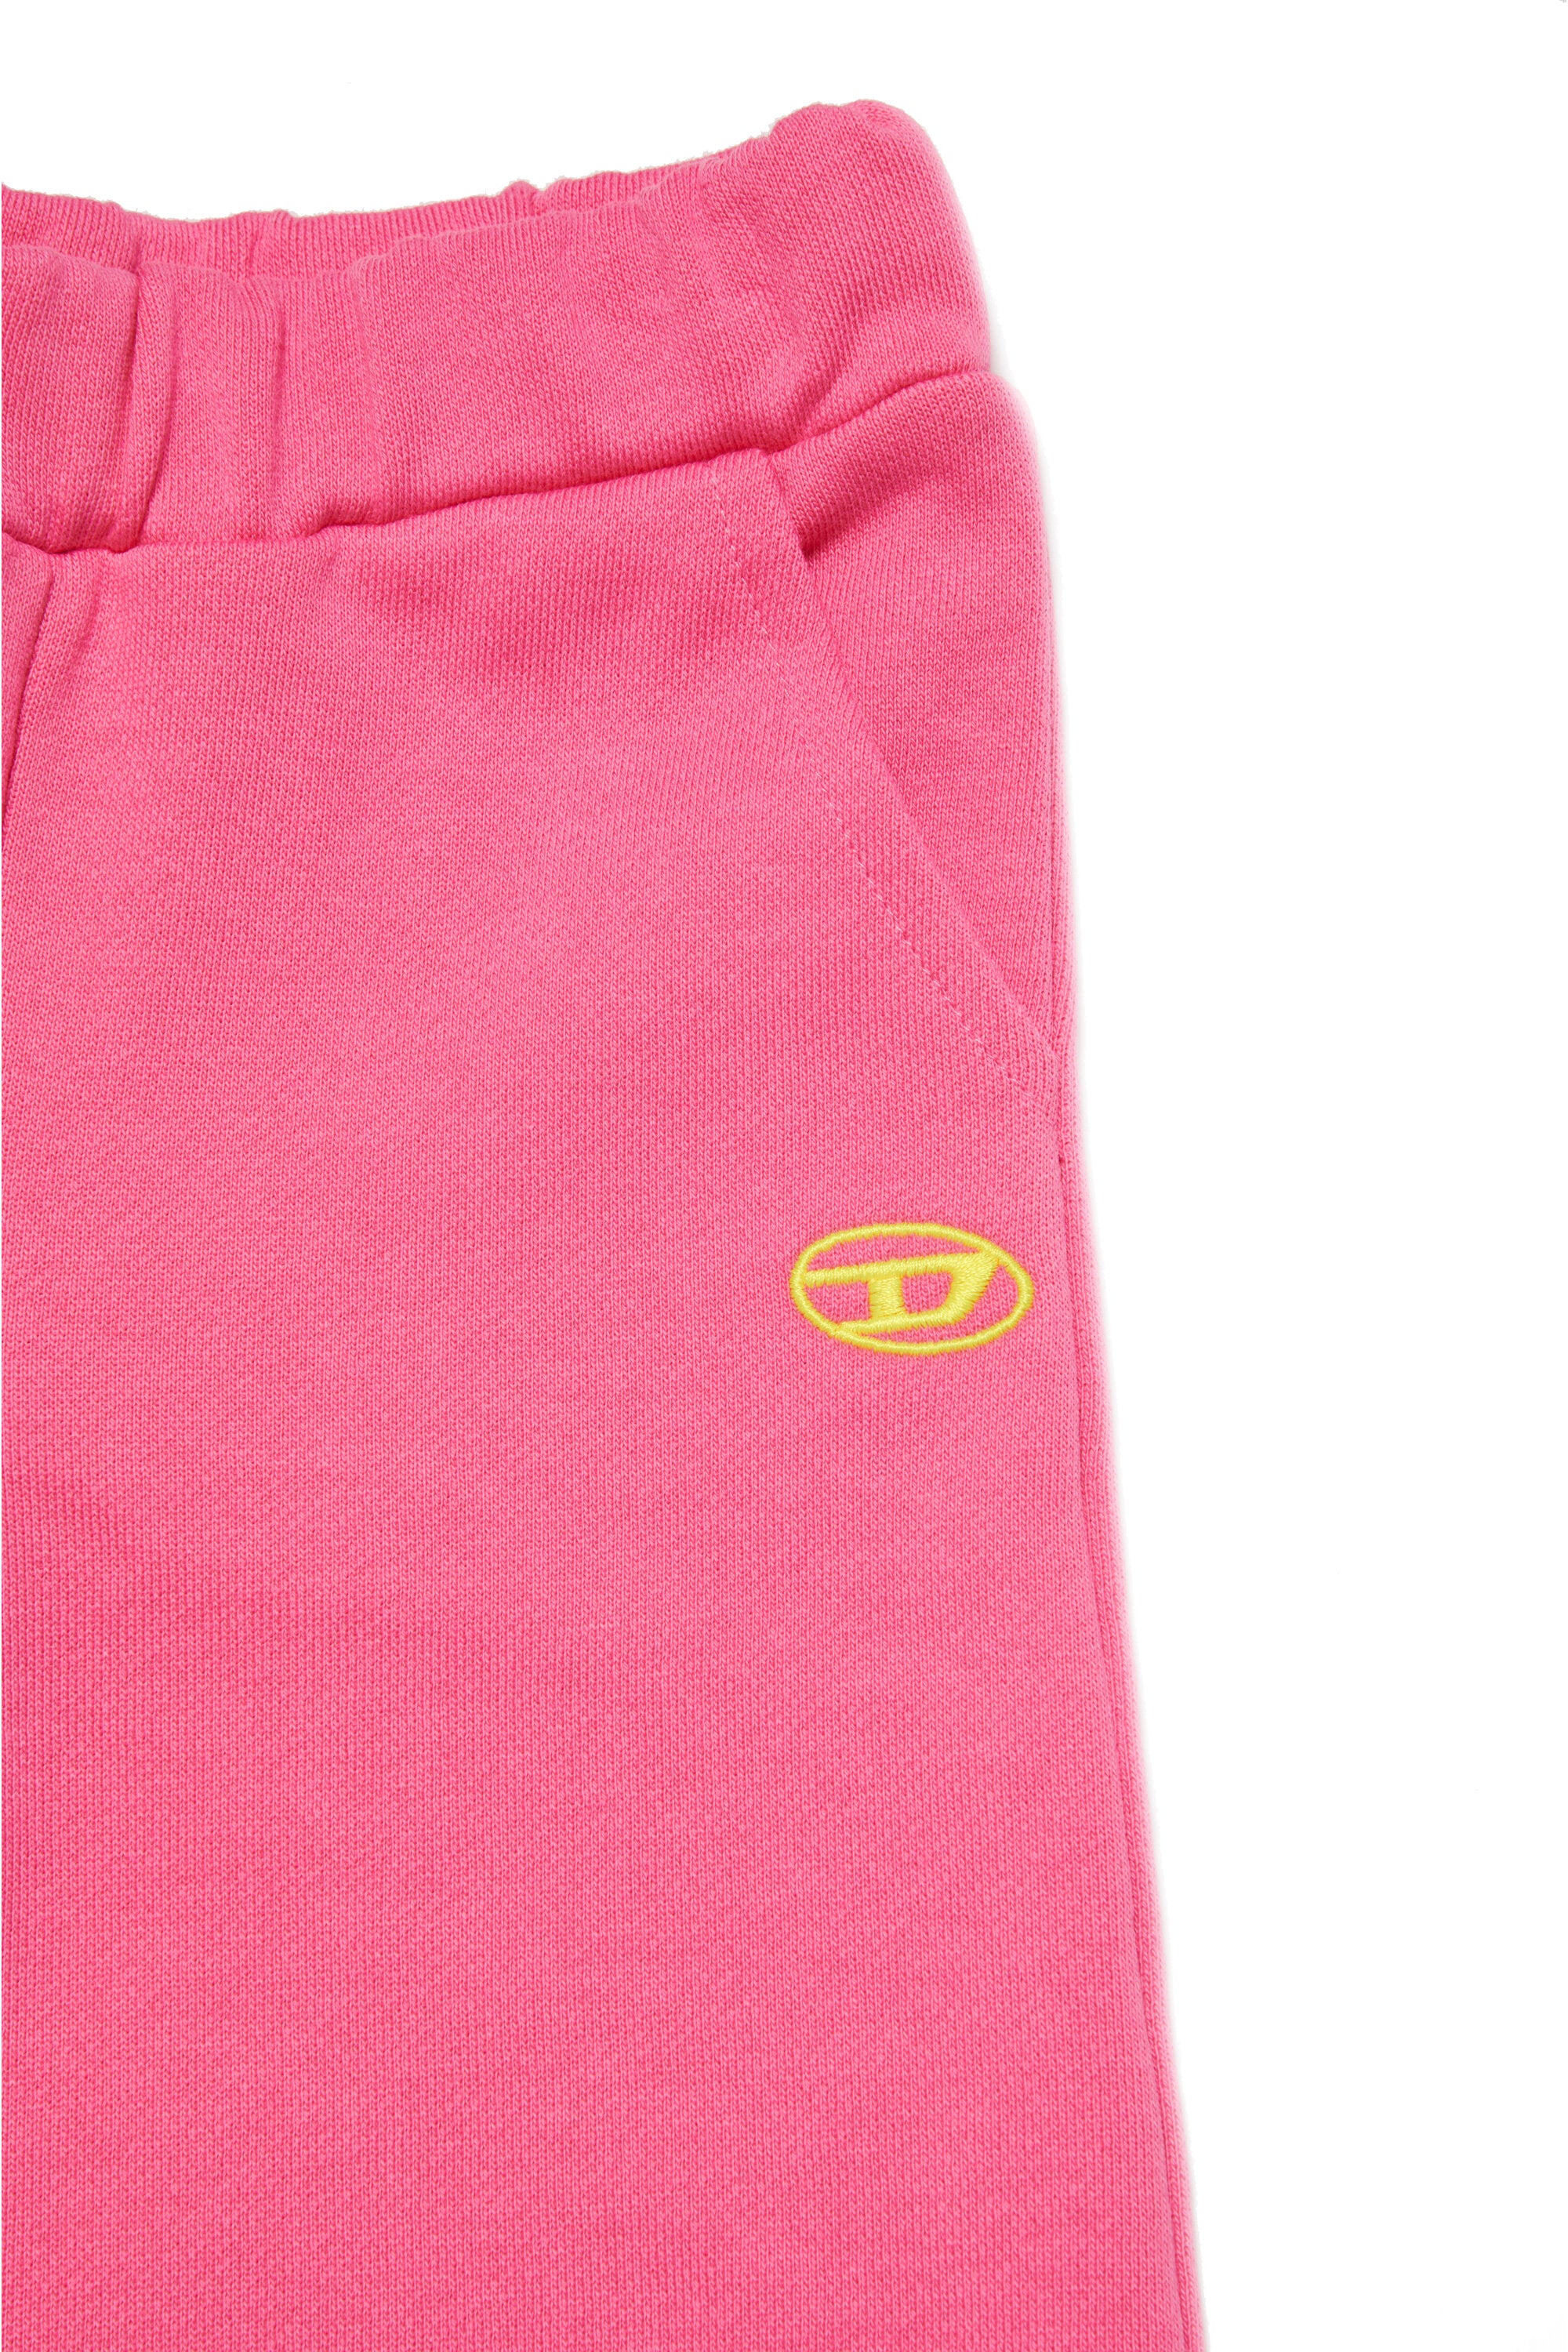 Pantalones en chándal con logotipo Oval D